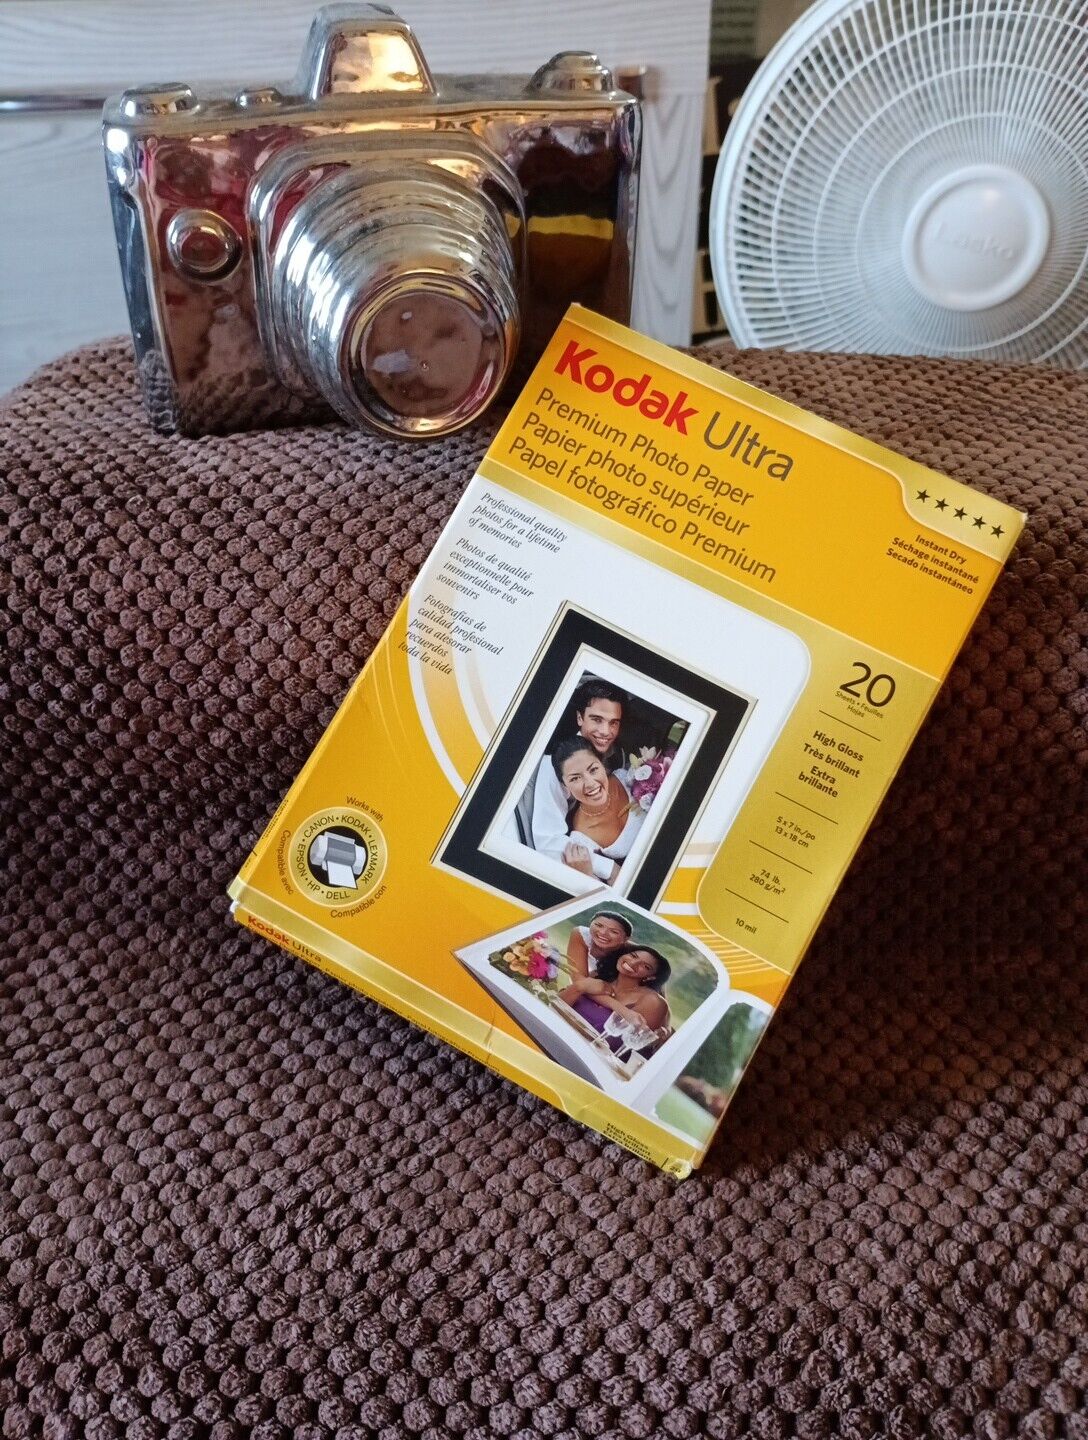 Kodak Ultra Premium Photo Paper 5x7, High Gloss, 9 Sheets Only